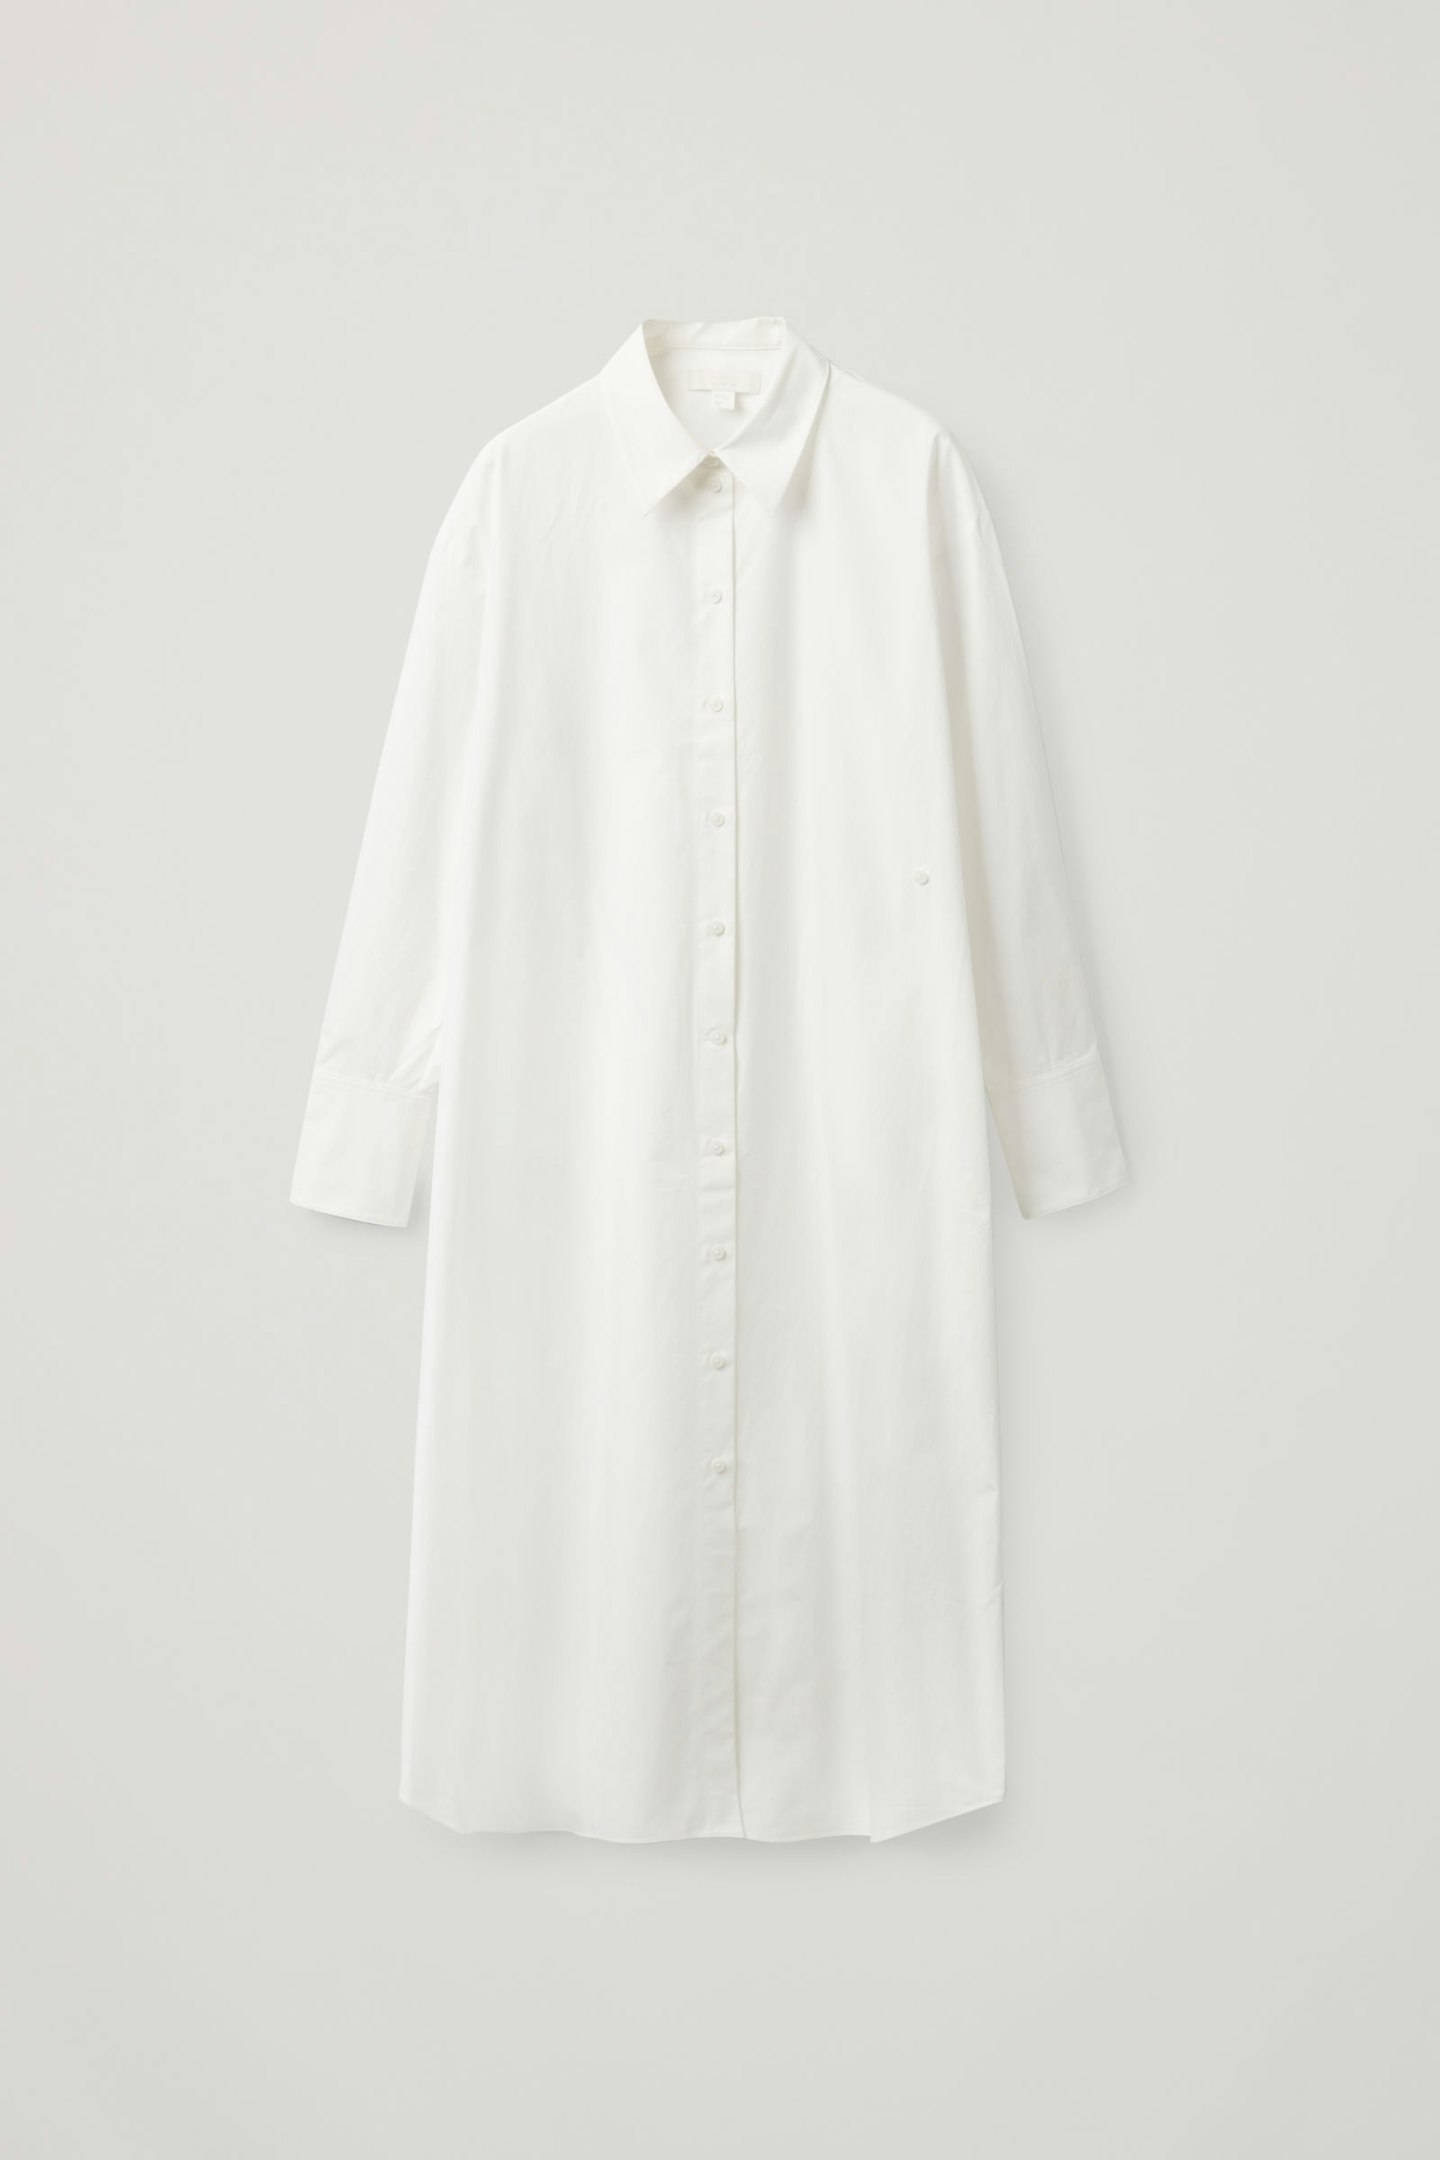 COS, Wrap Shirt Dress, £69